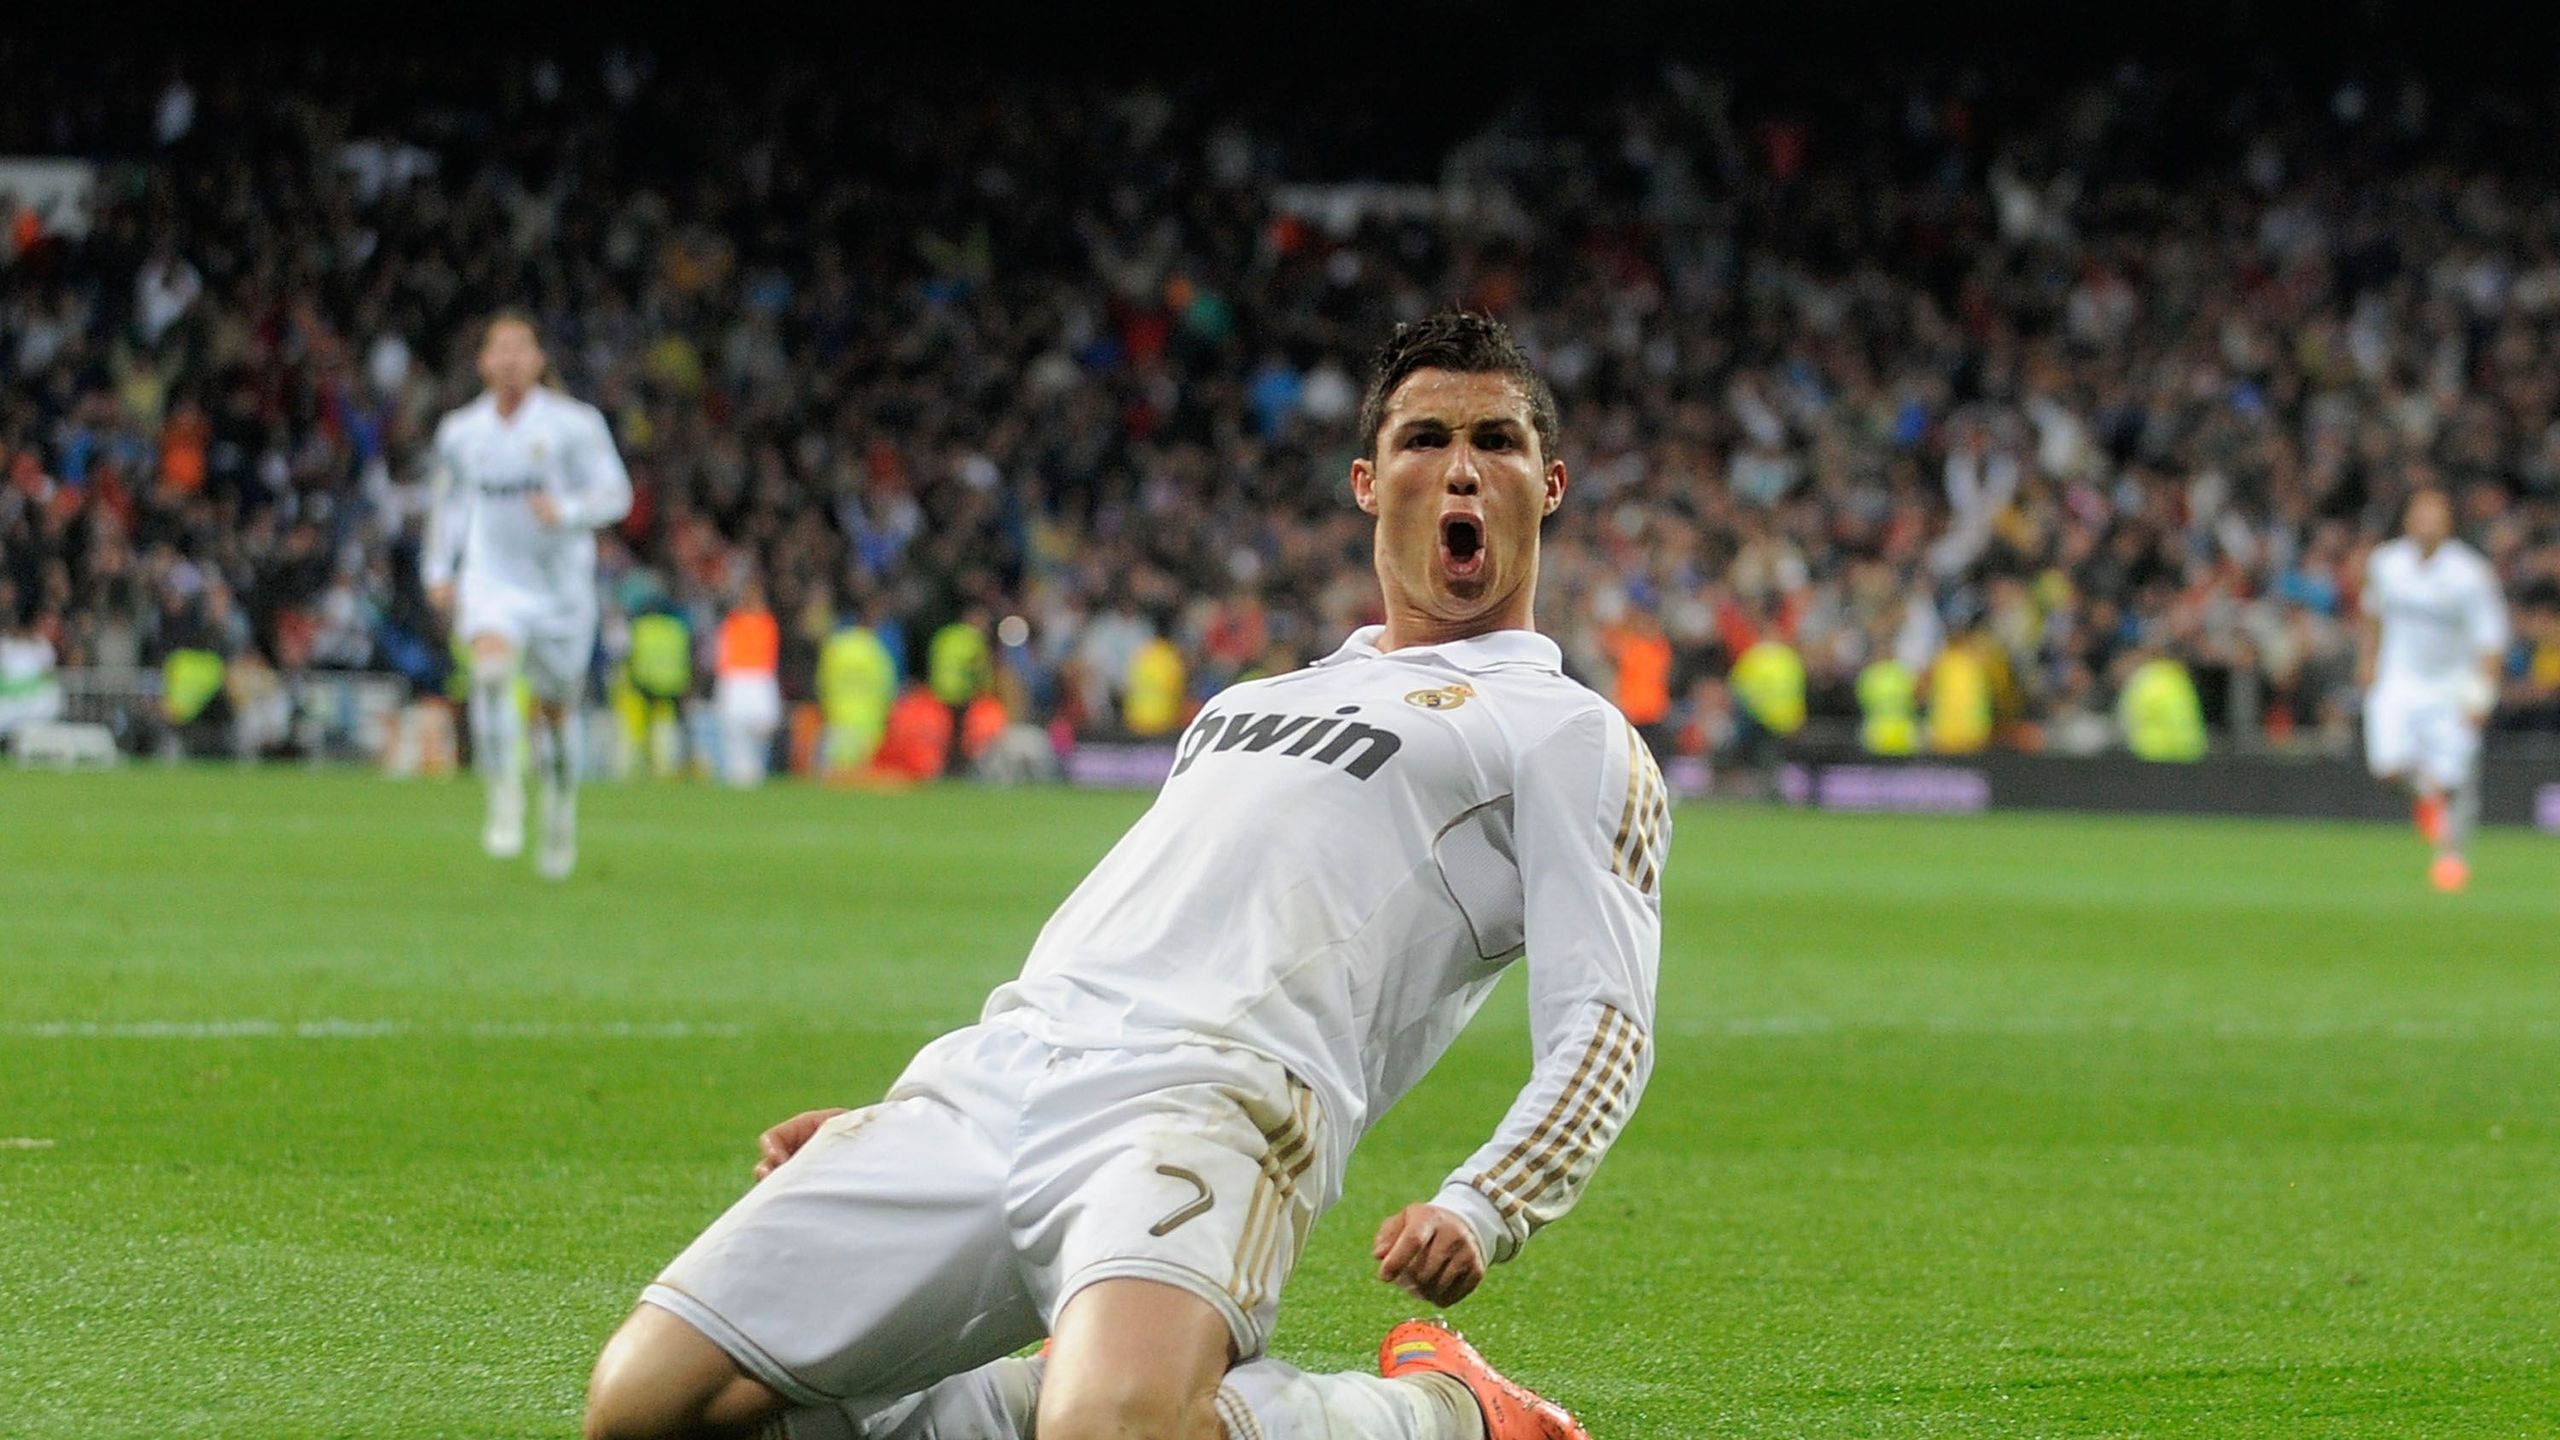 Cristiano Ronaldo Celebrating for 2560x1440 HDTV resolution